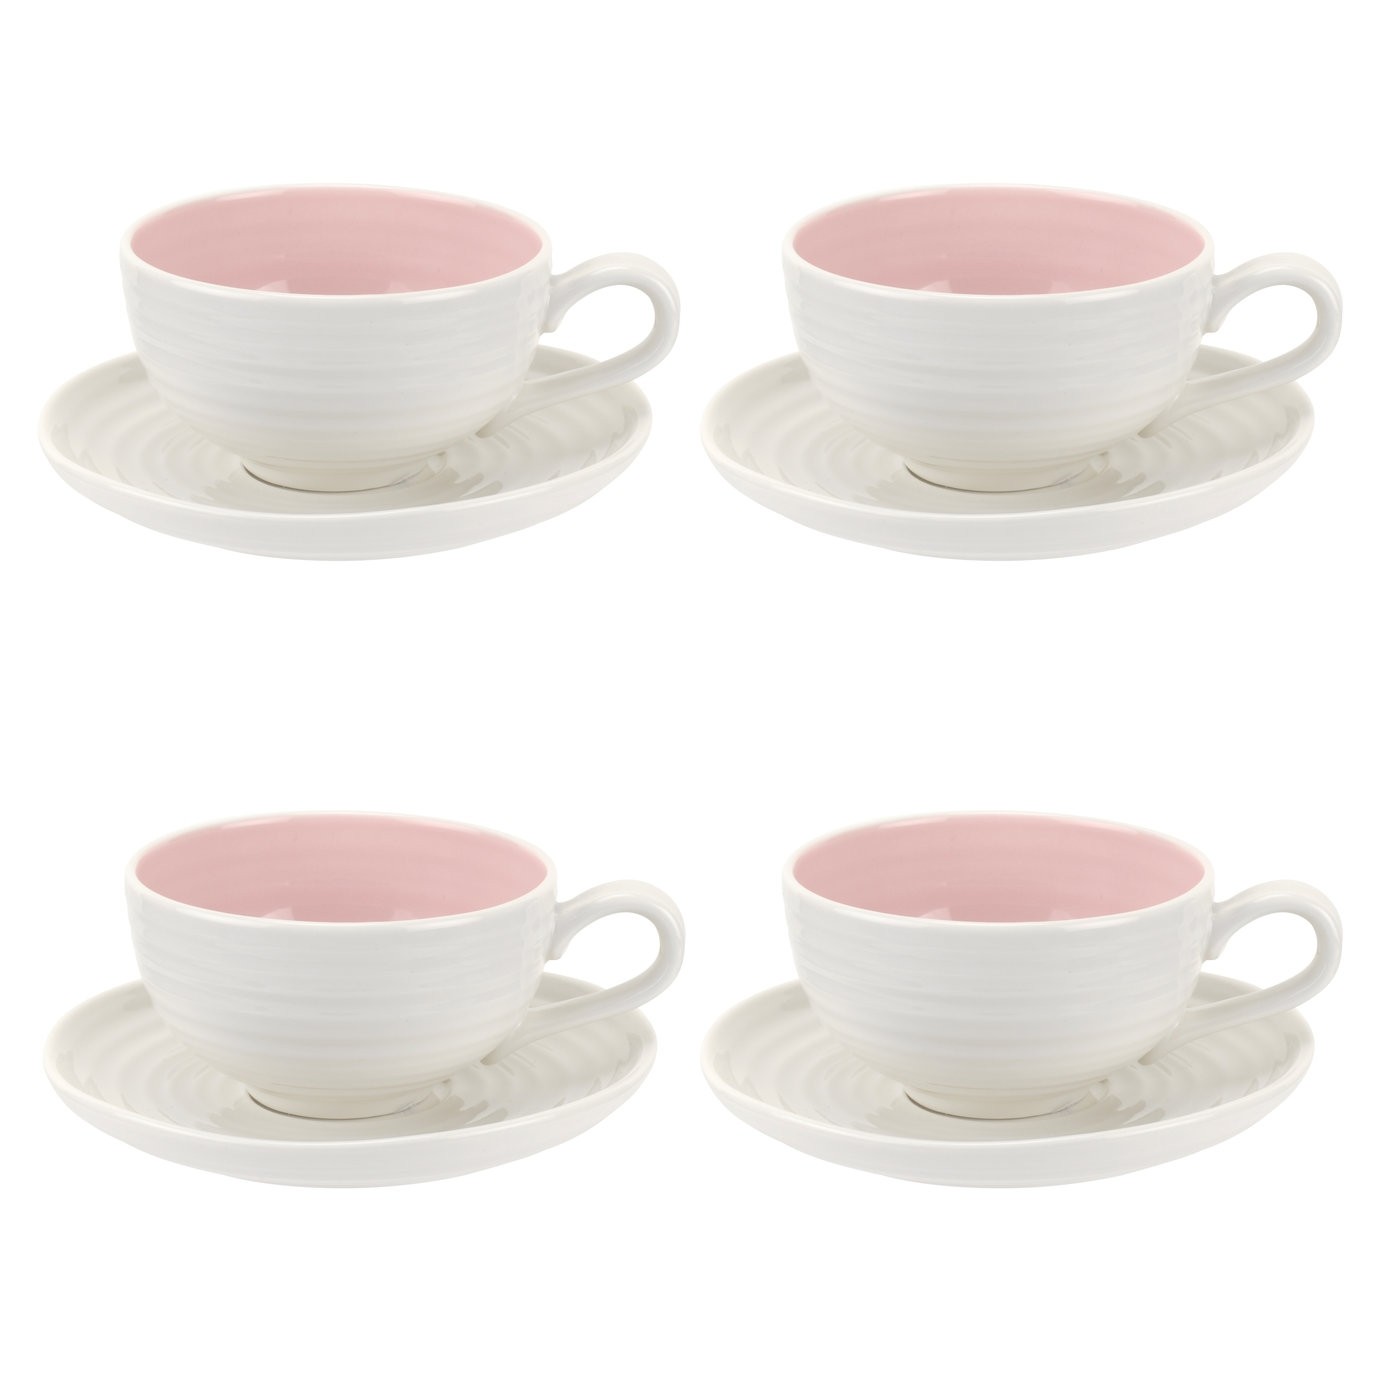 Sophie Conran for Portmeirion Pink Tea Cup & Saucer Set of 4 ...